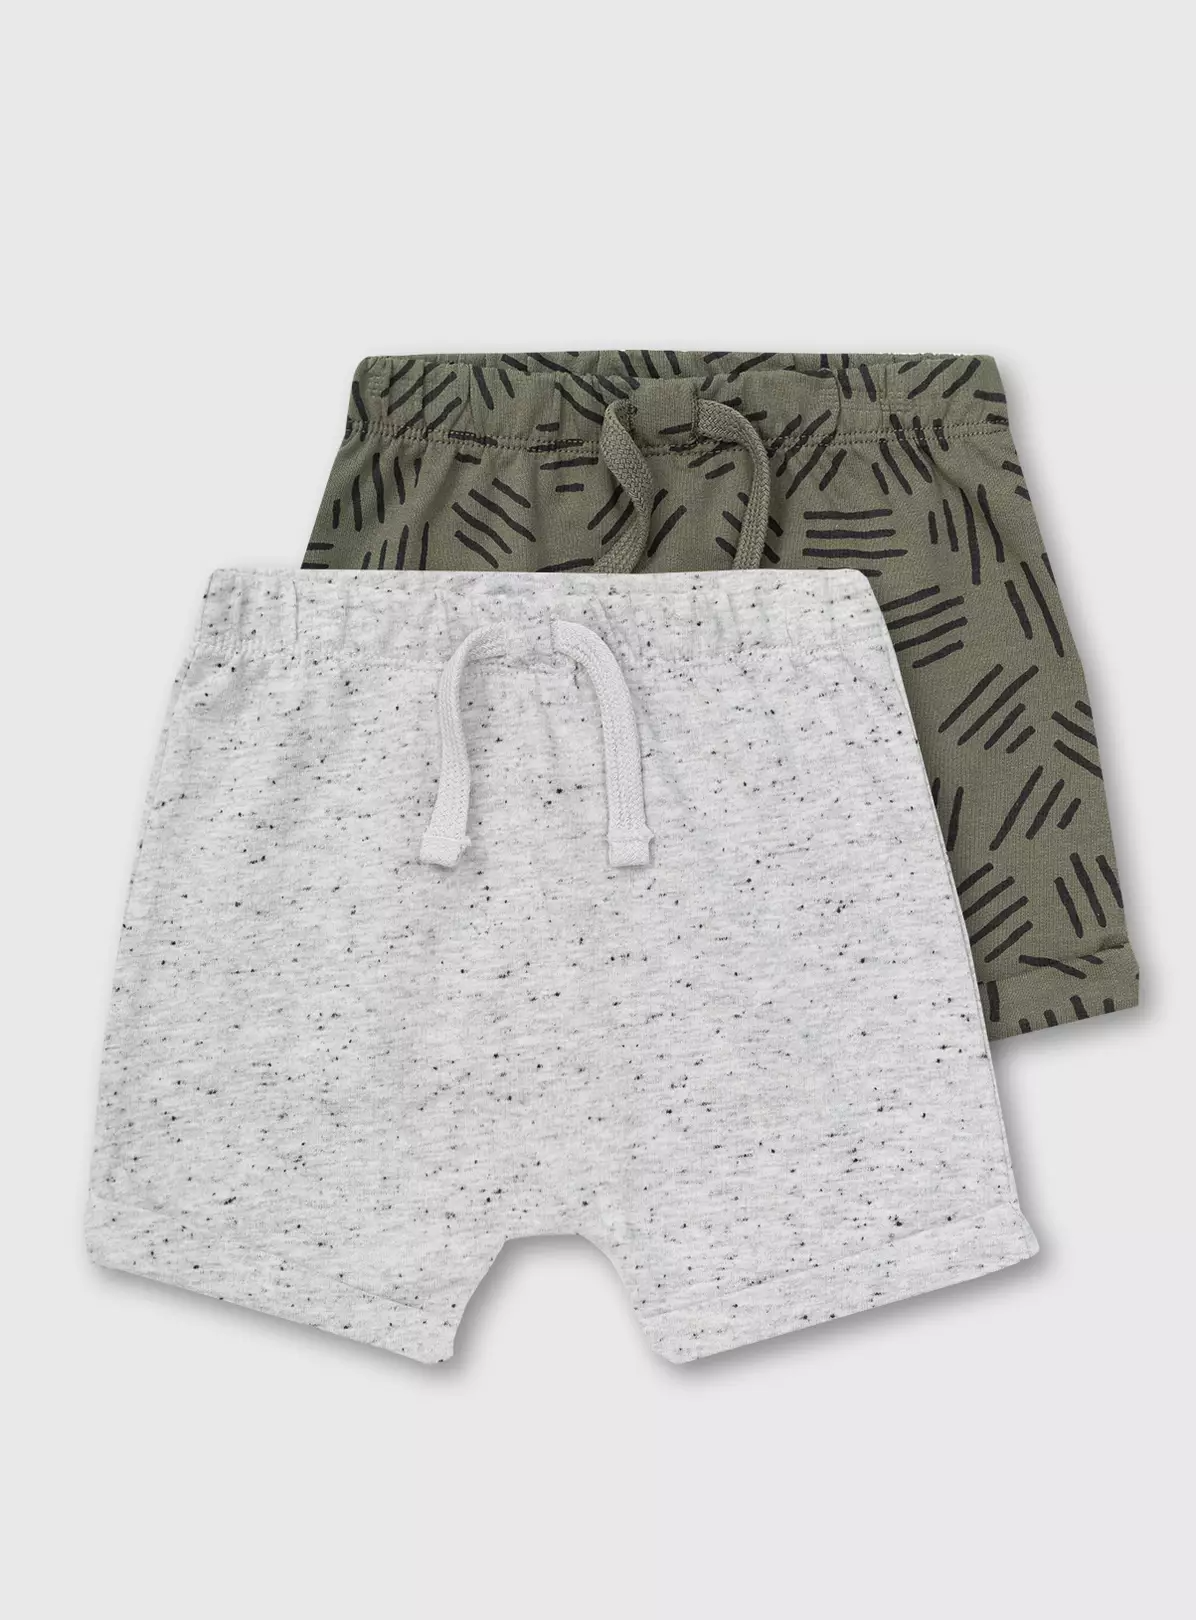 Grey & Khaki Shorts 2 Pack – Up to 1 mth